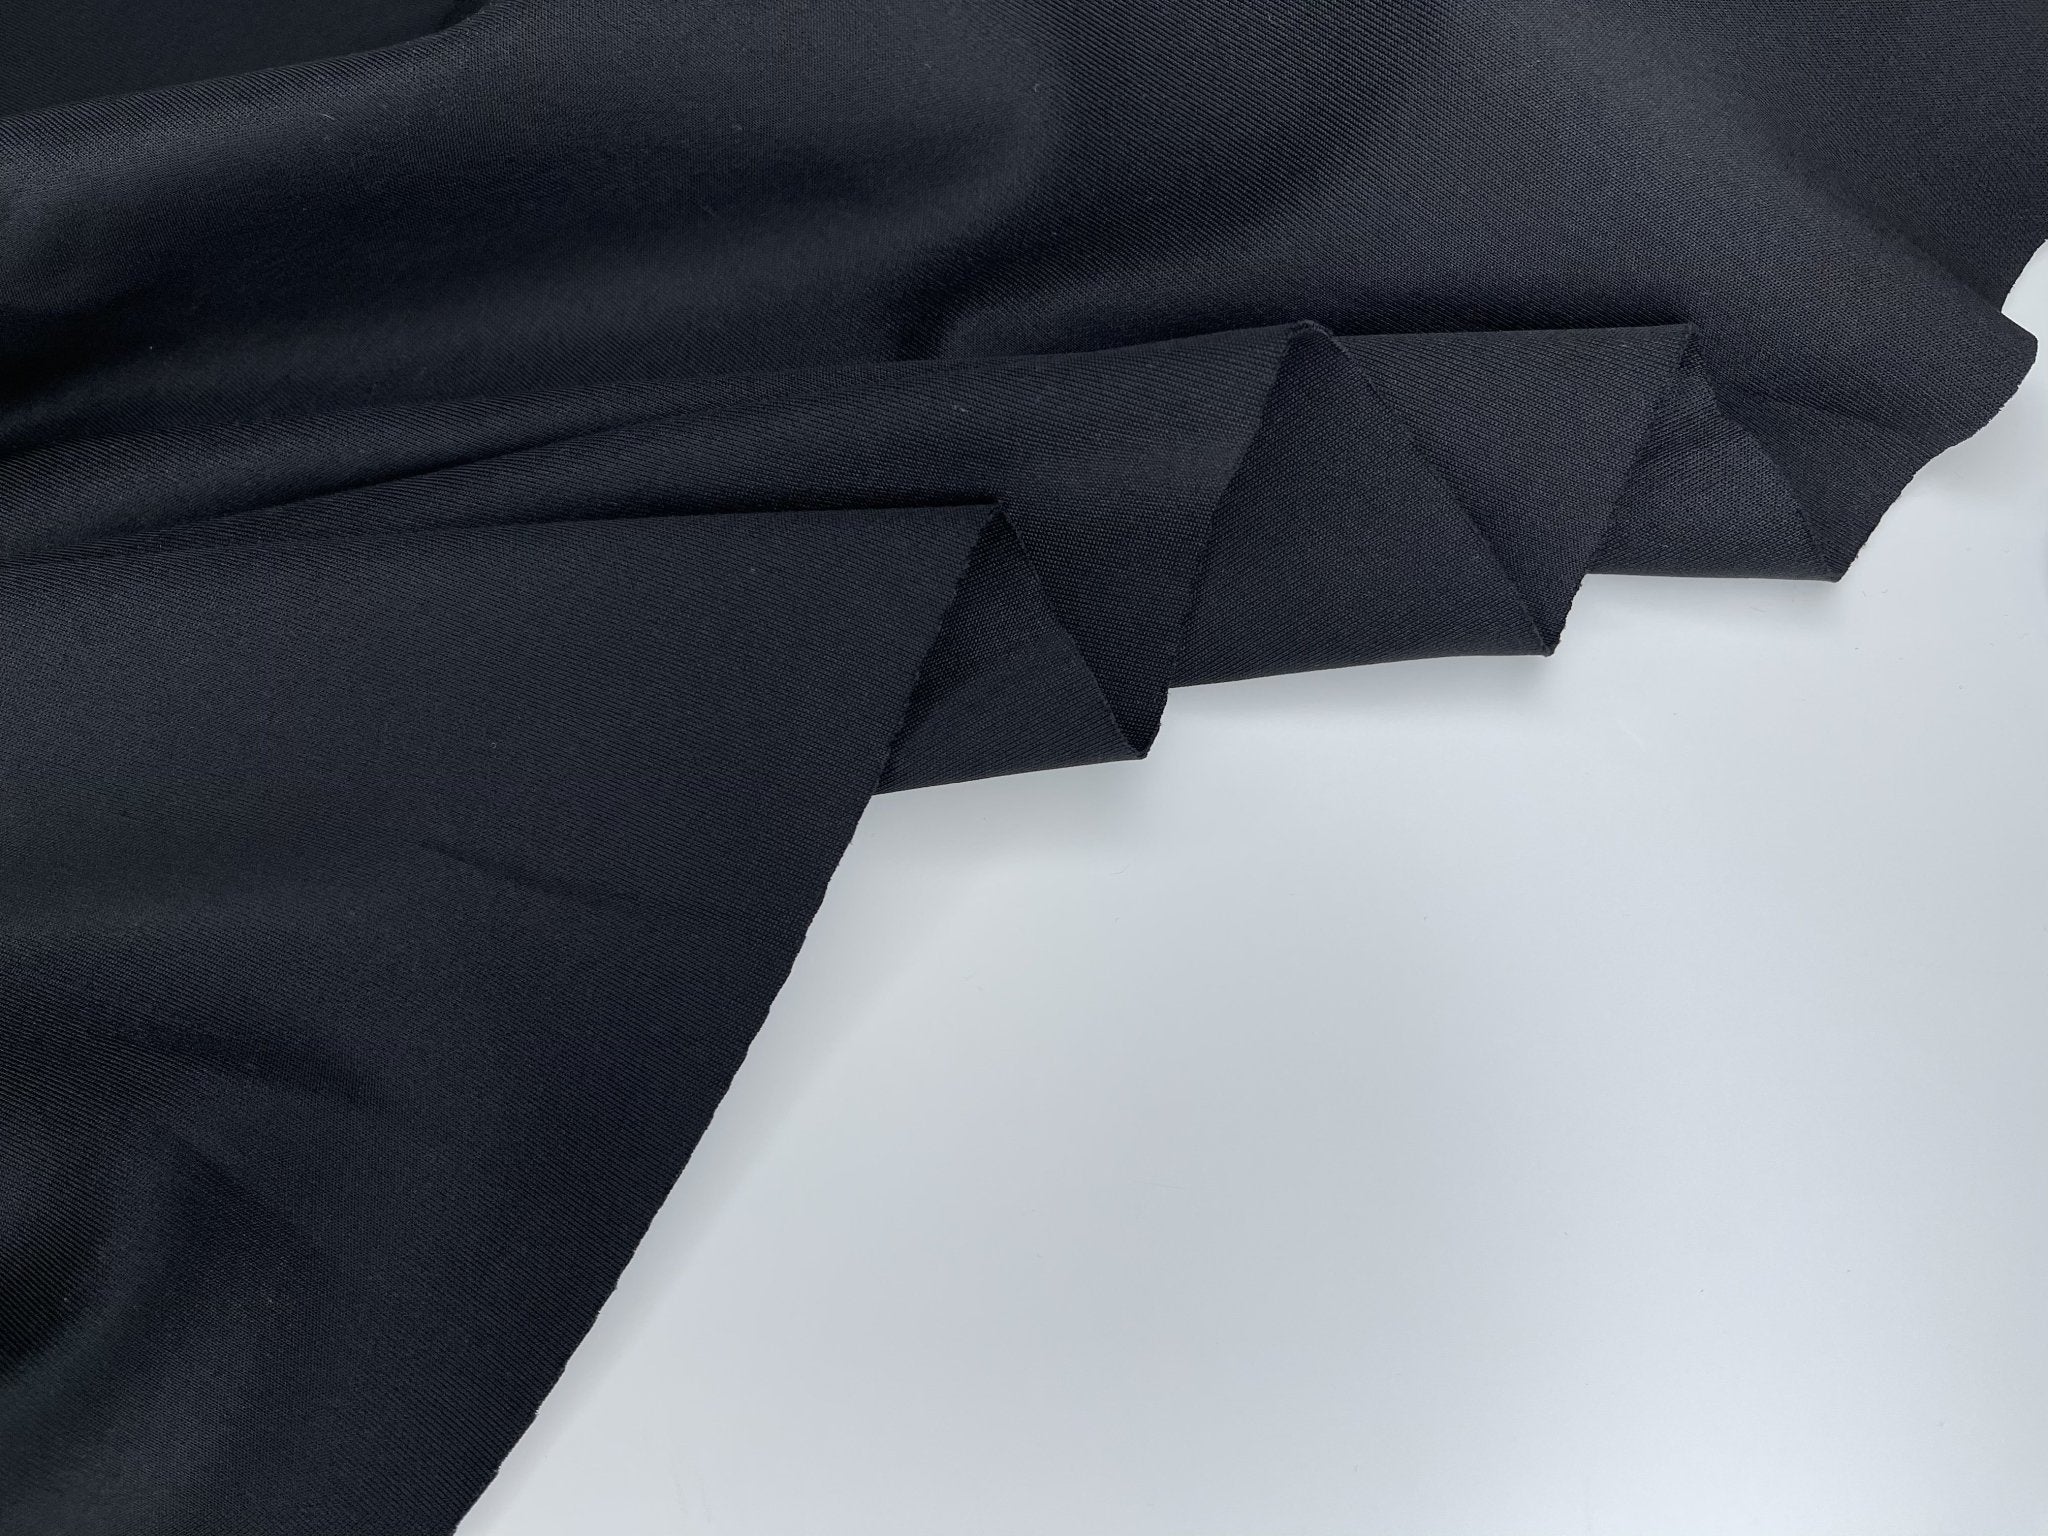 Supply 48% Rayon 46% Polyester 6% Spandex Scuba Knit Fabric